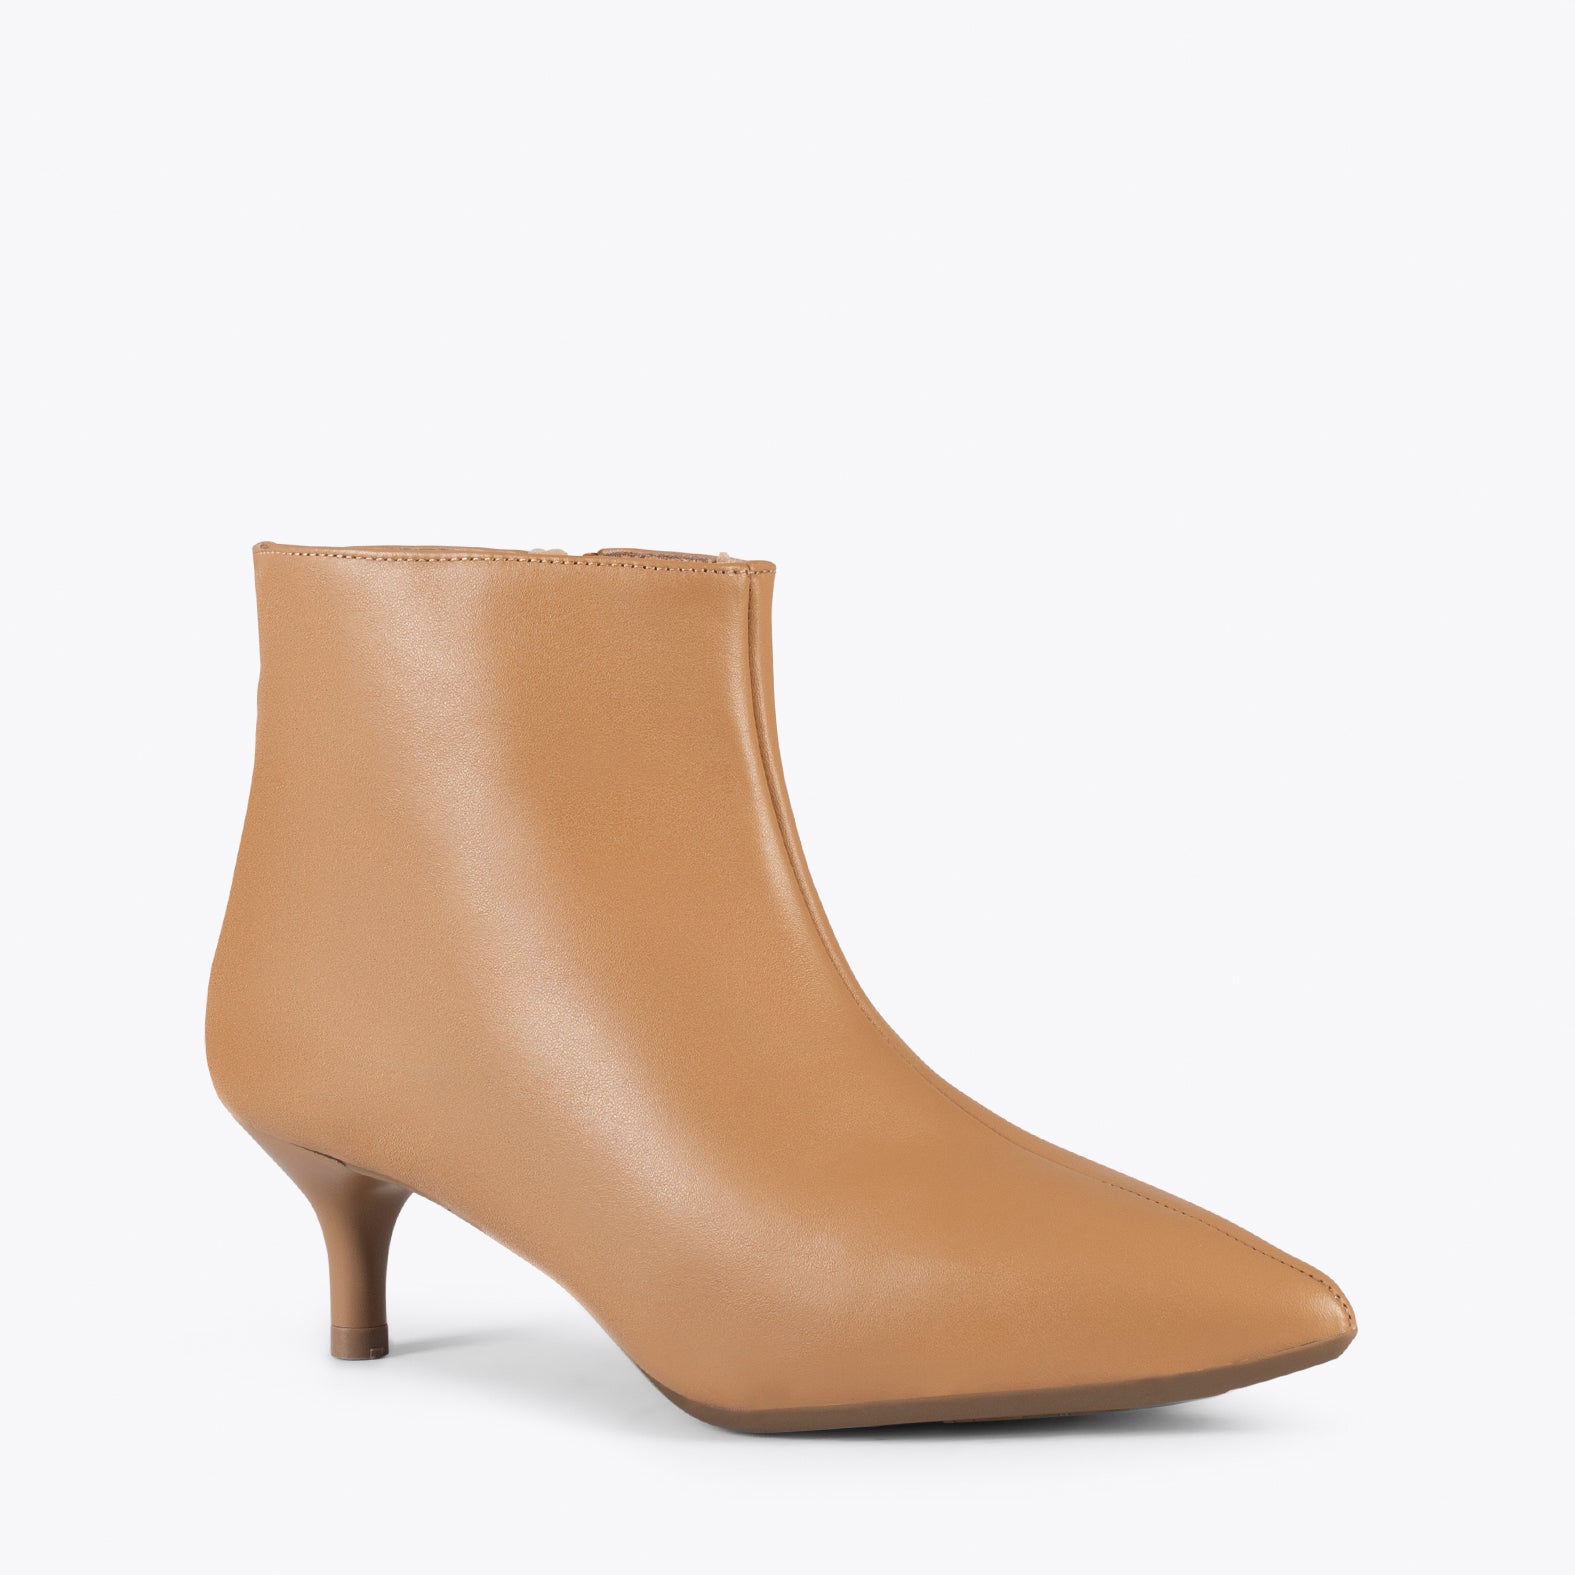 OUTFIT – CAMEL elegant low heel booties